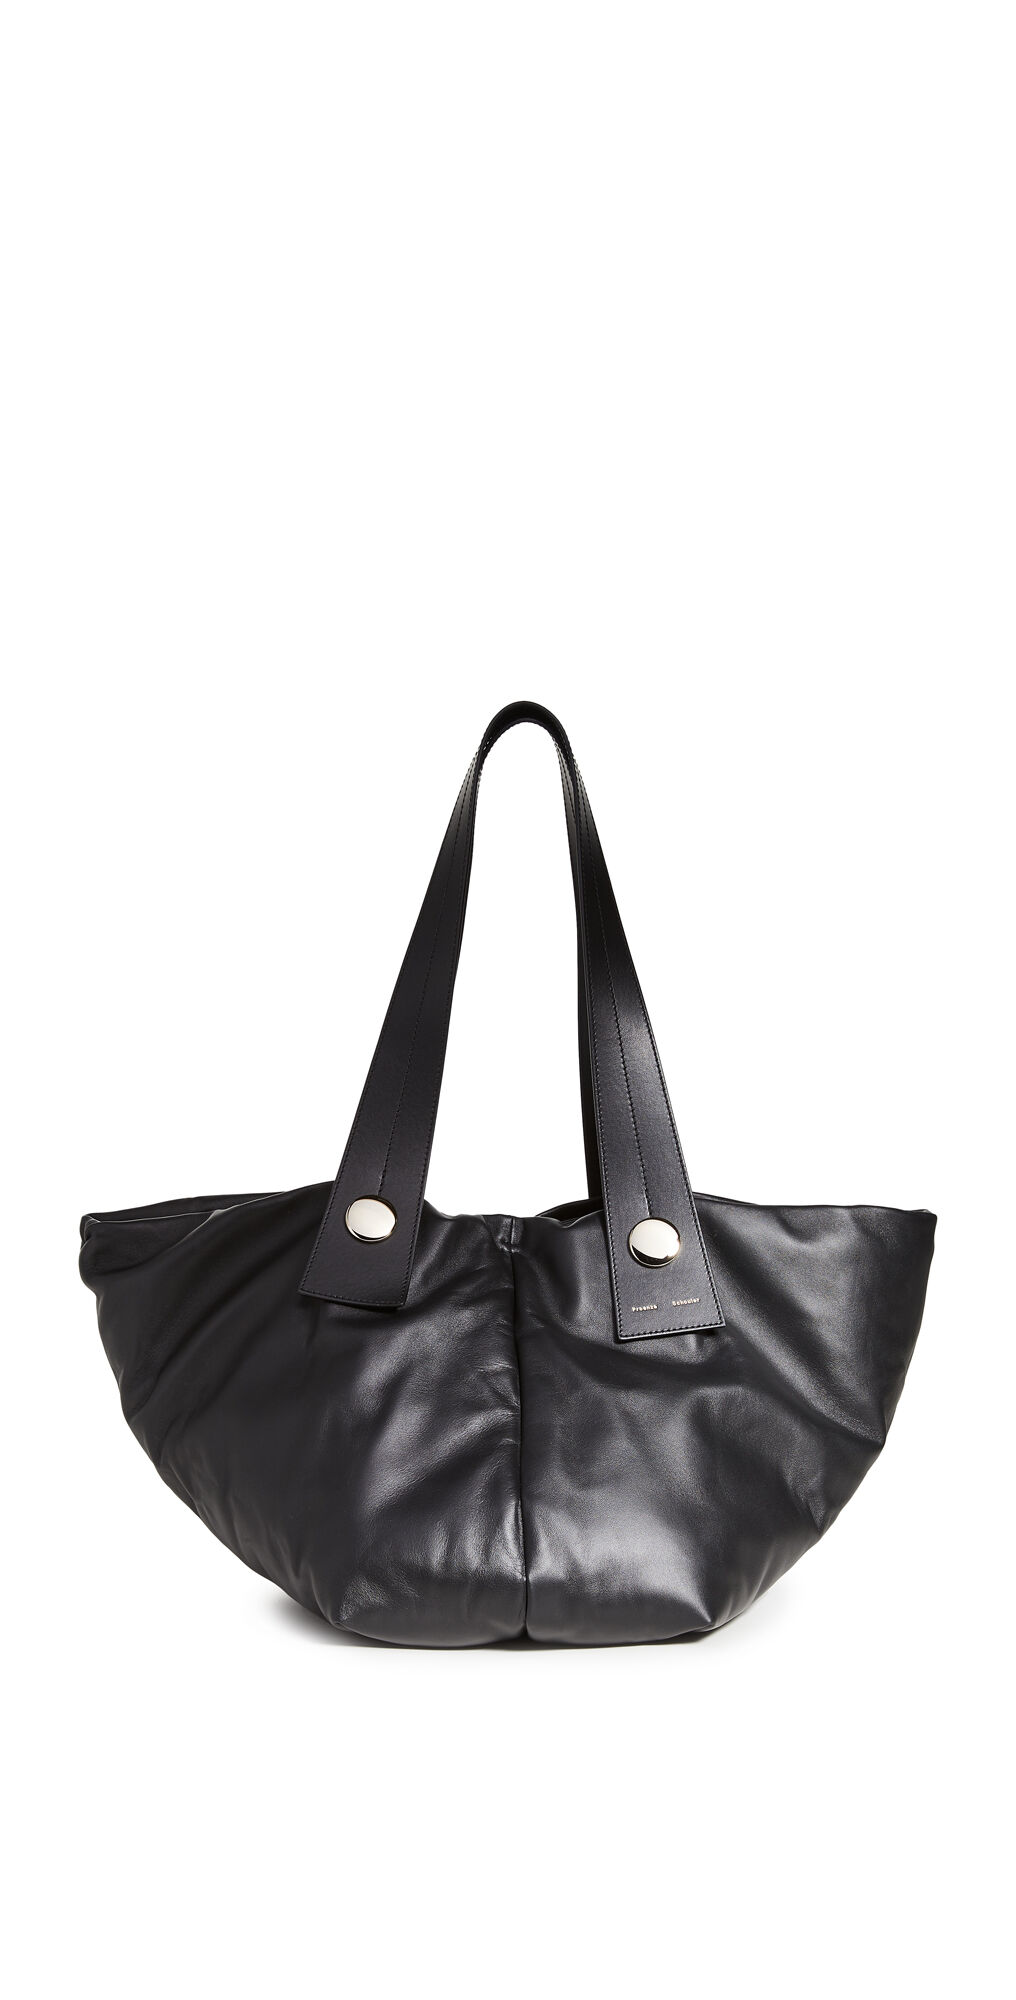 Proenza Schouler Tobo Bag Black One Size  Black  size:One Size